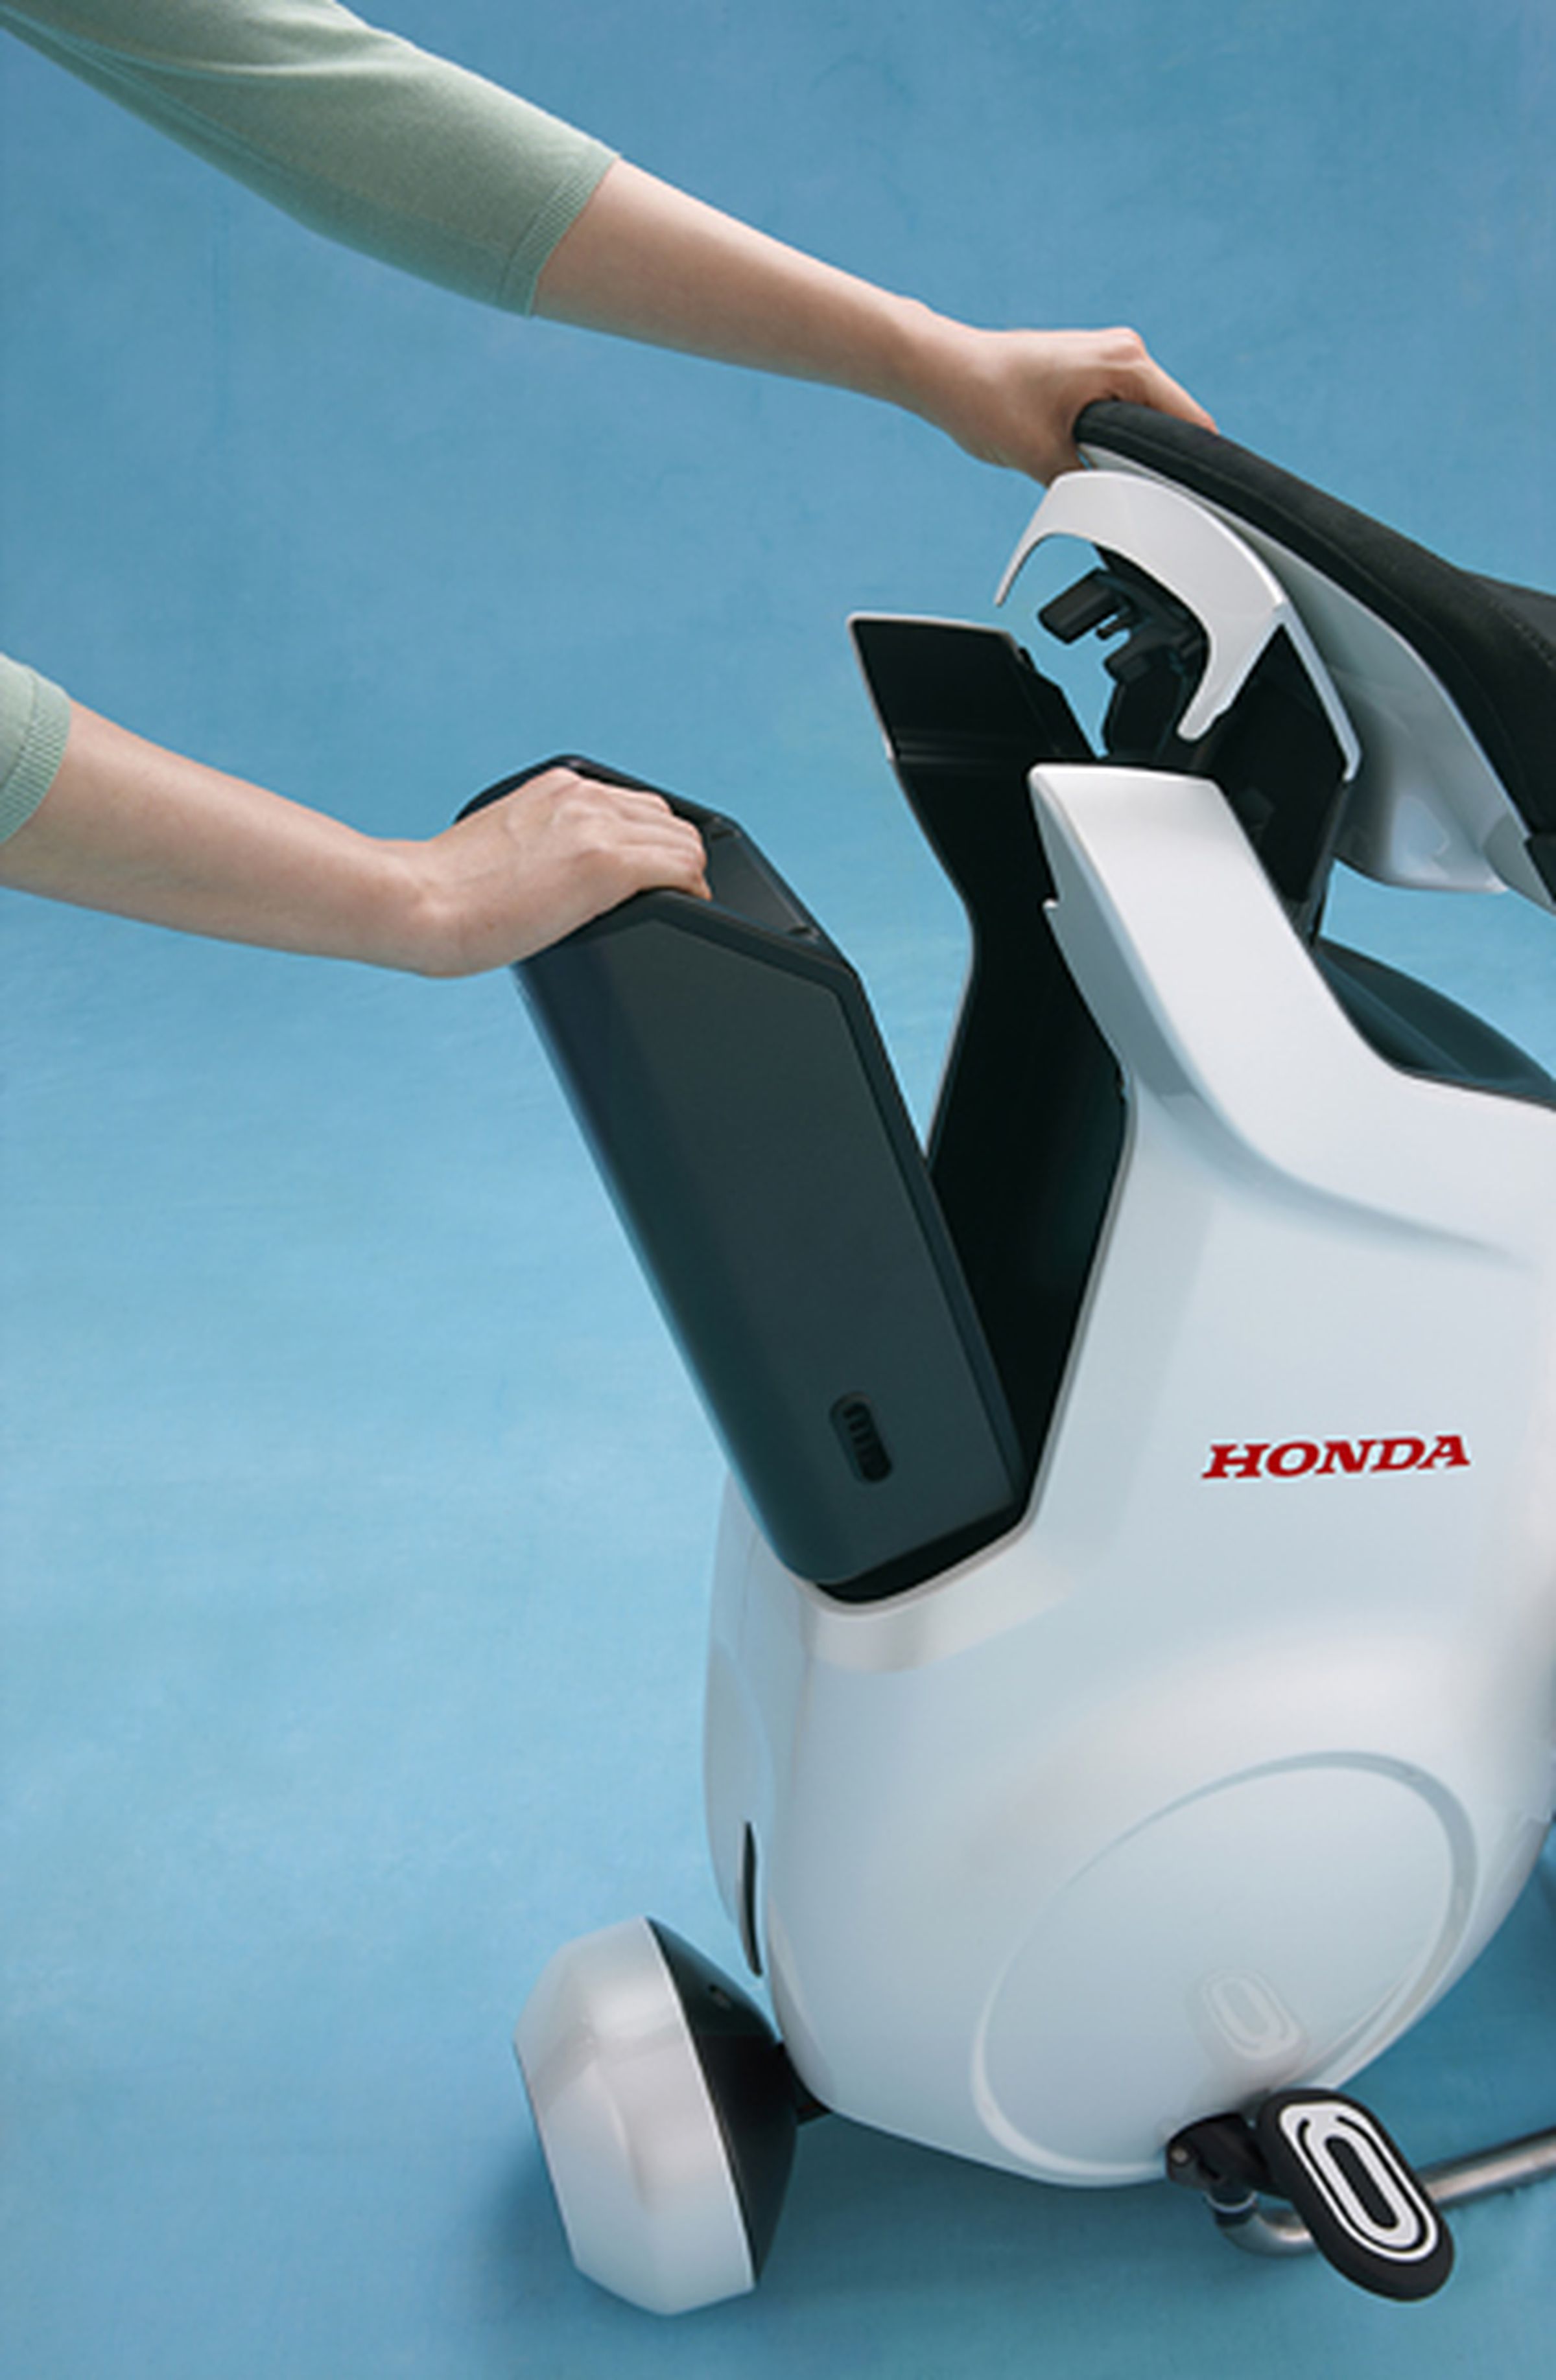 Honda Uni-Cub personal mobility device press pictures